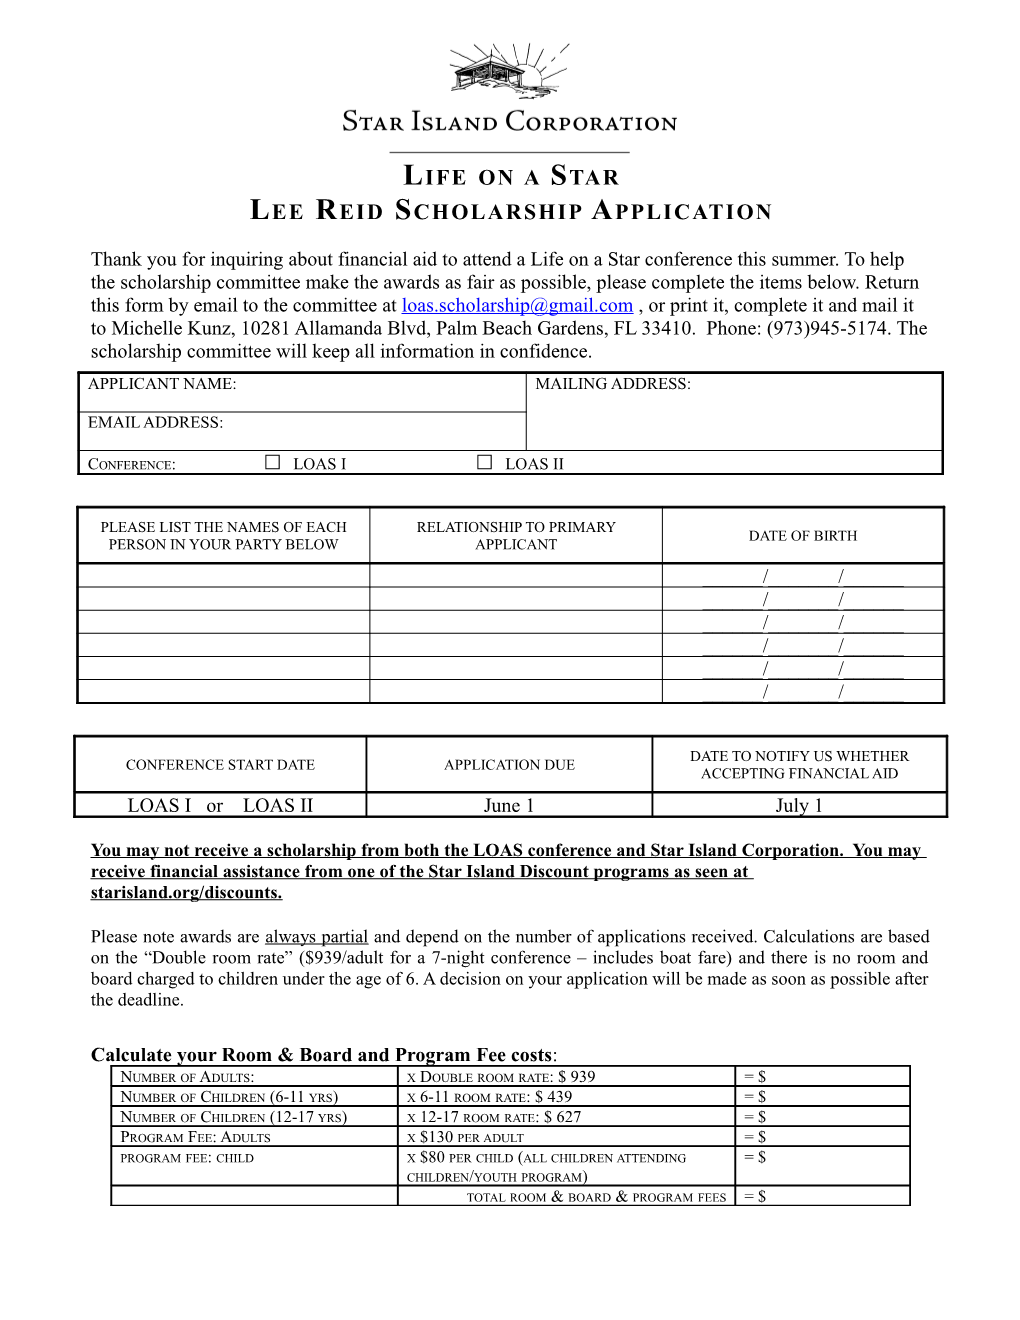 Lee Reid Scholarship Application